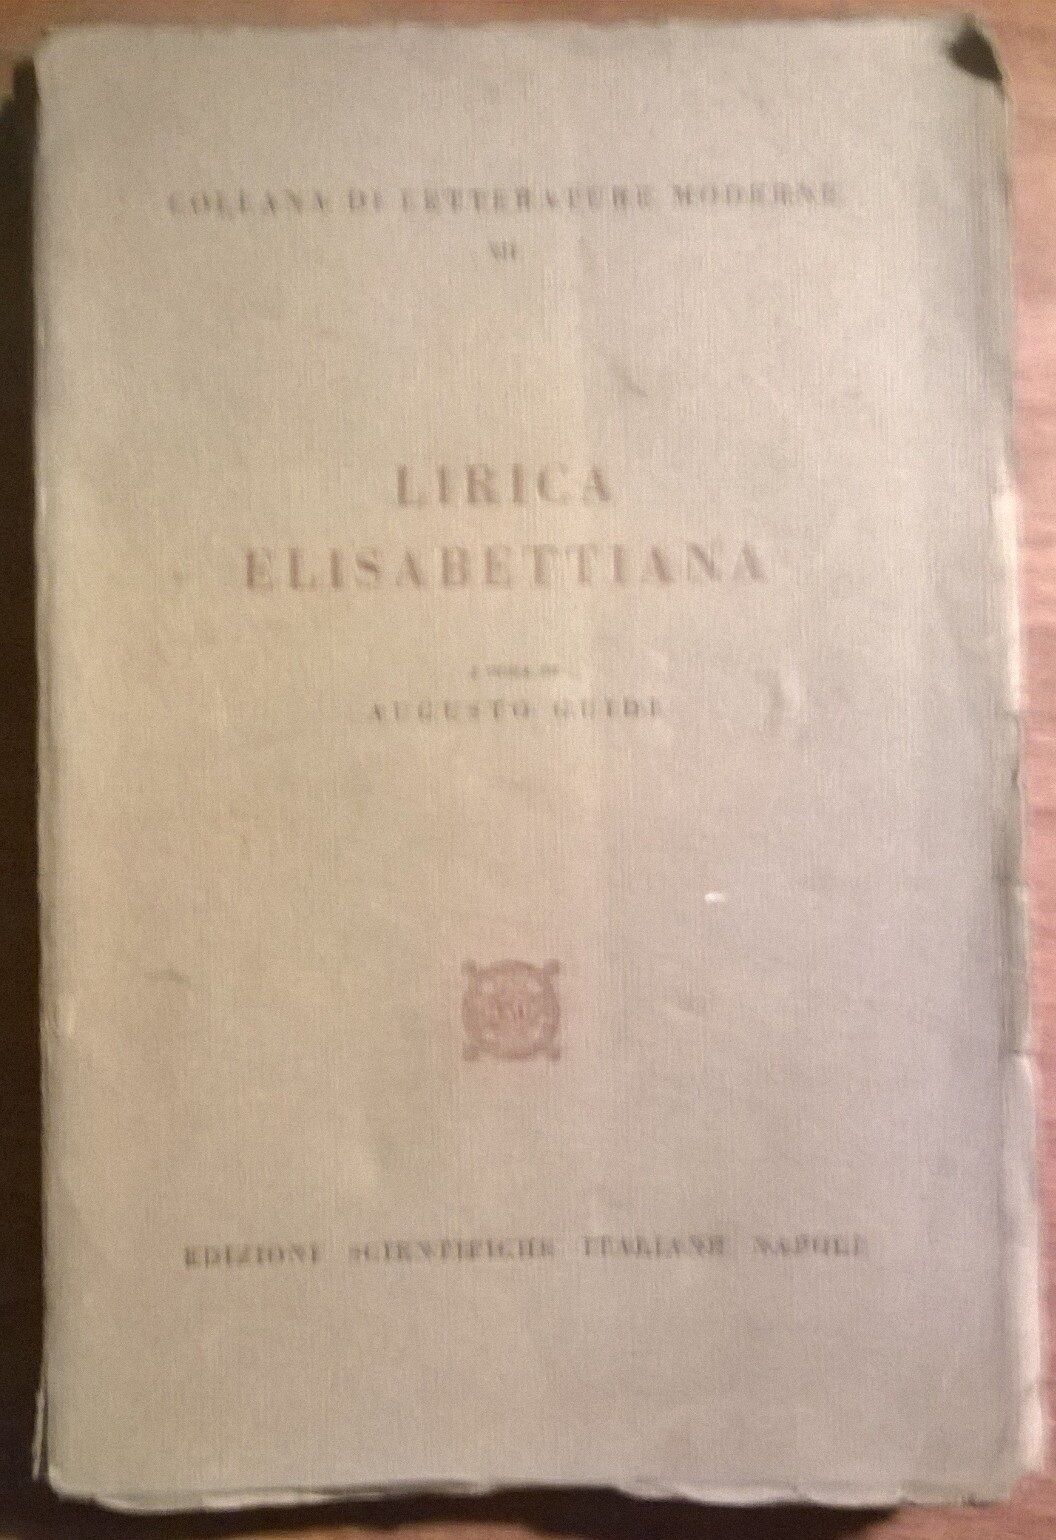 Lirica elisabettiana - Augusto Guidi, ESI, 1960 - L